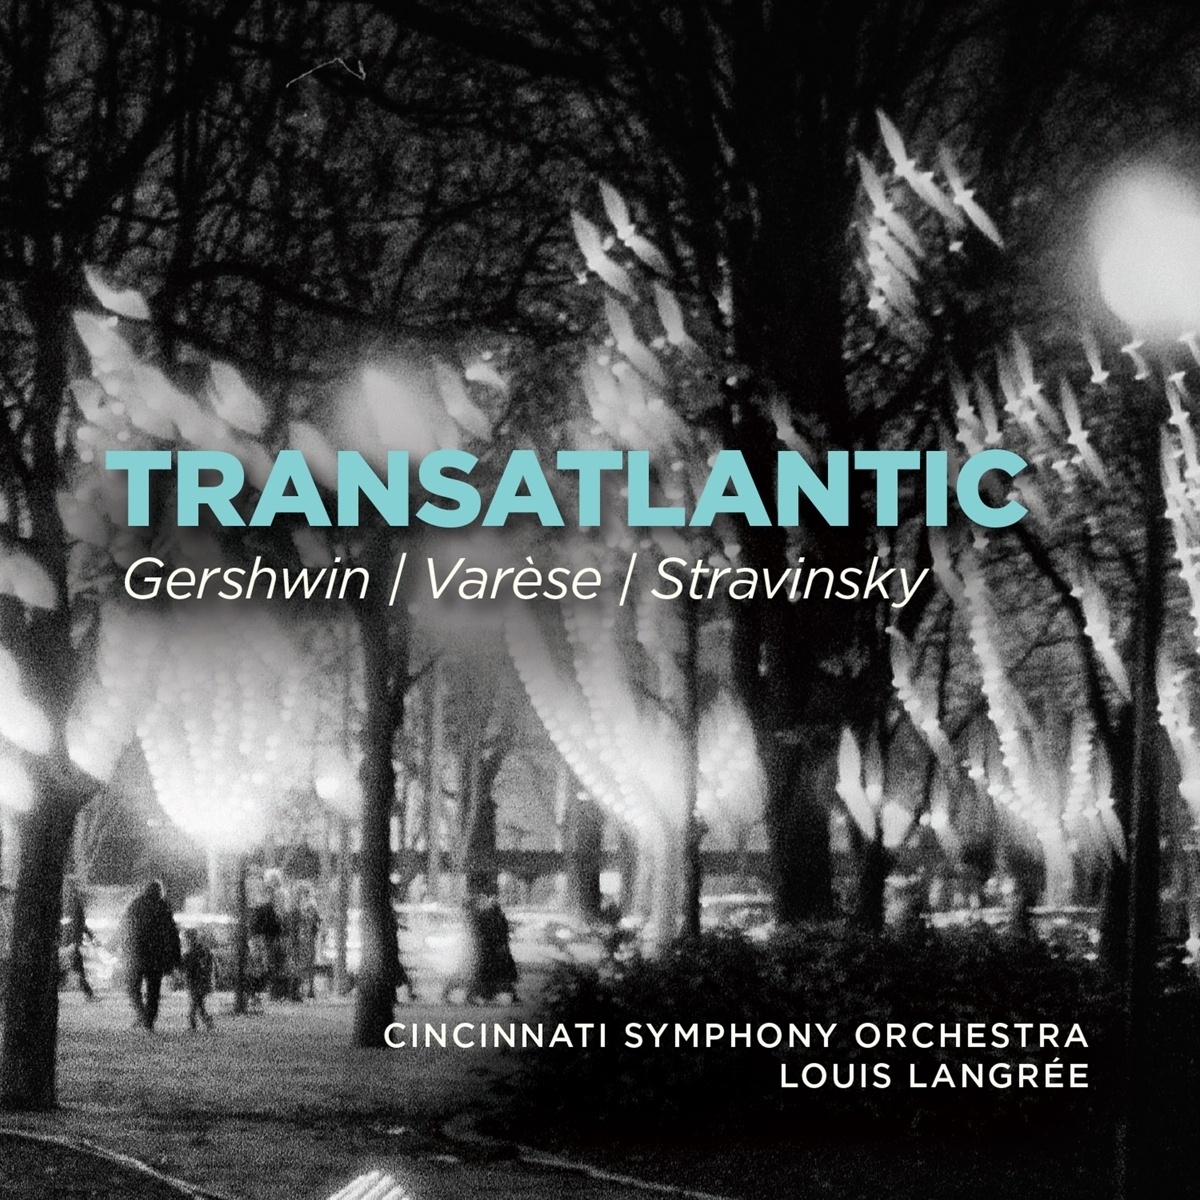 Transatlantic - Louis Langrée  Cincinnati Symphony Orchestra. (CD)